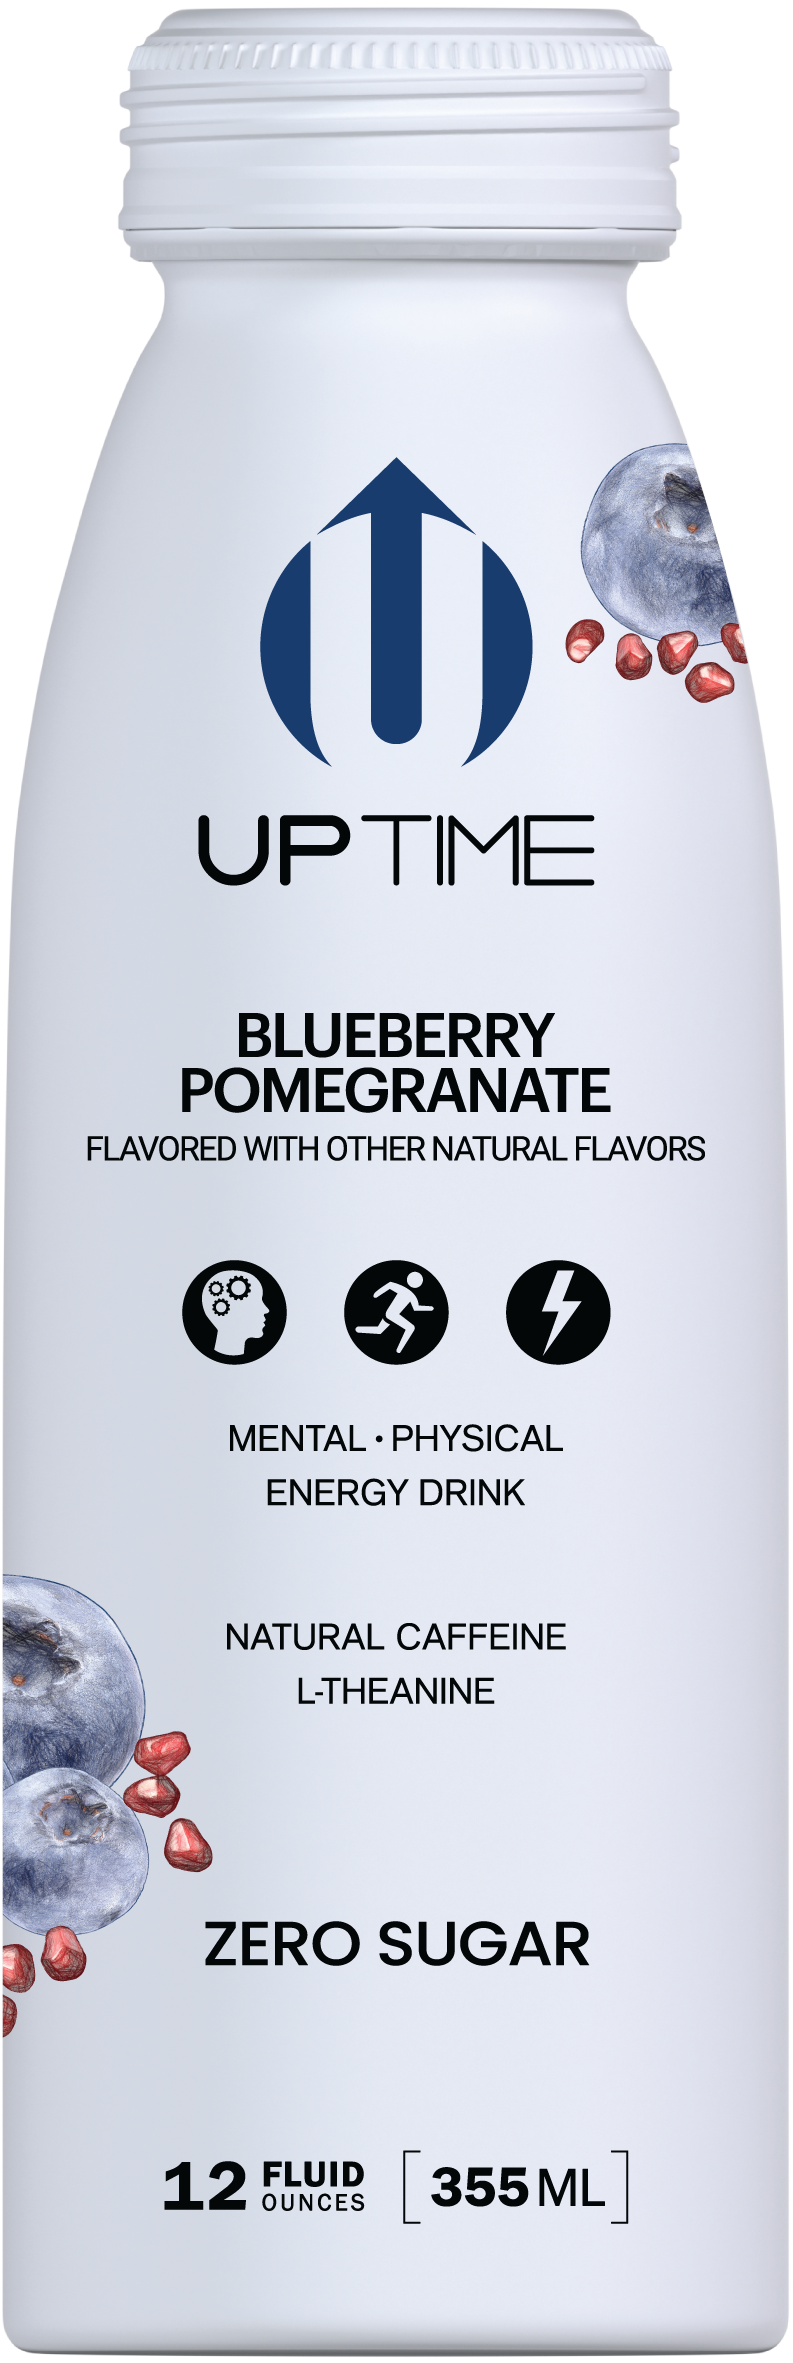 UPTIME Premium Energy Drink, Blueberry Pomegranate - Sugar Free, 12oz Bottles (Pack of 12)